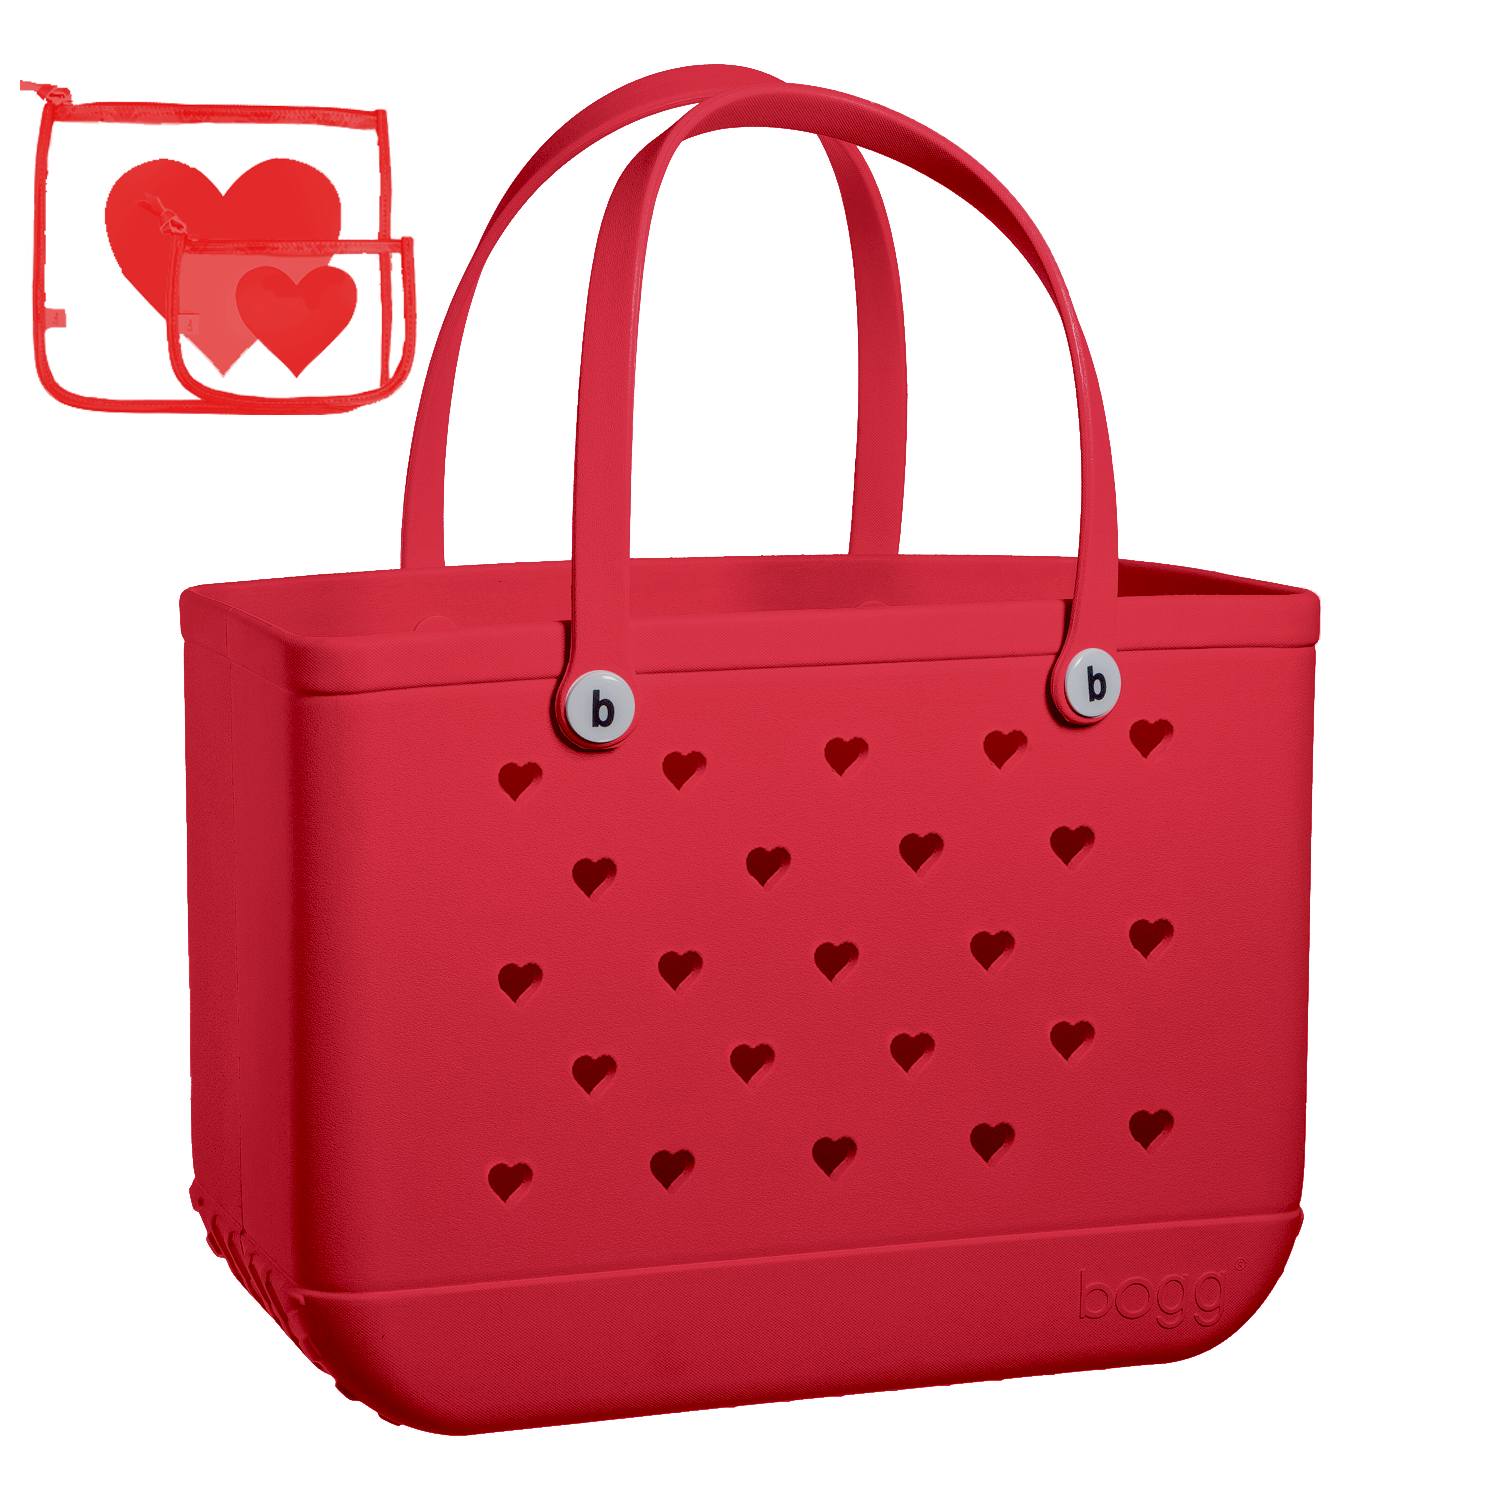 Large Bogg Bag - Red Love